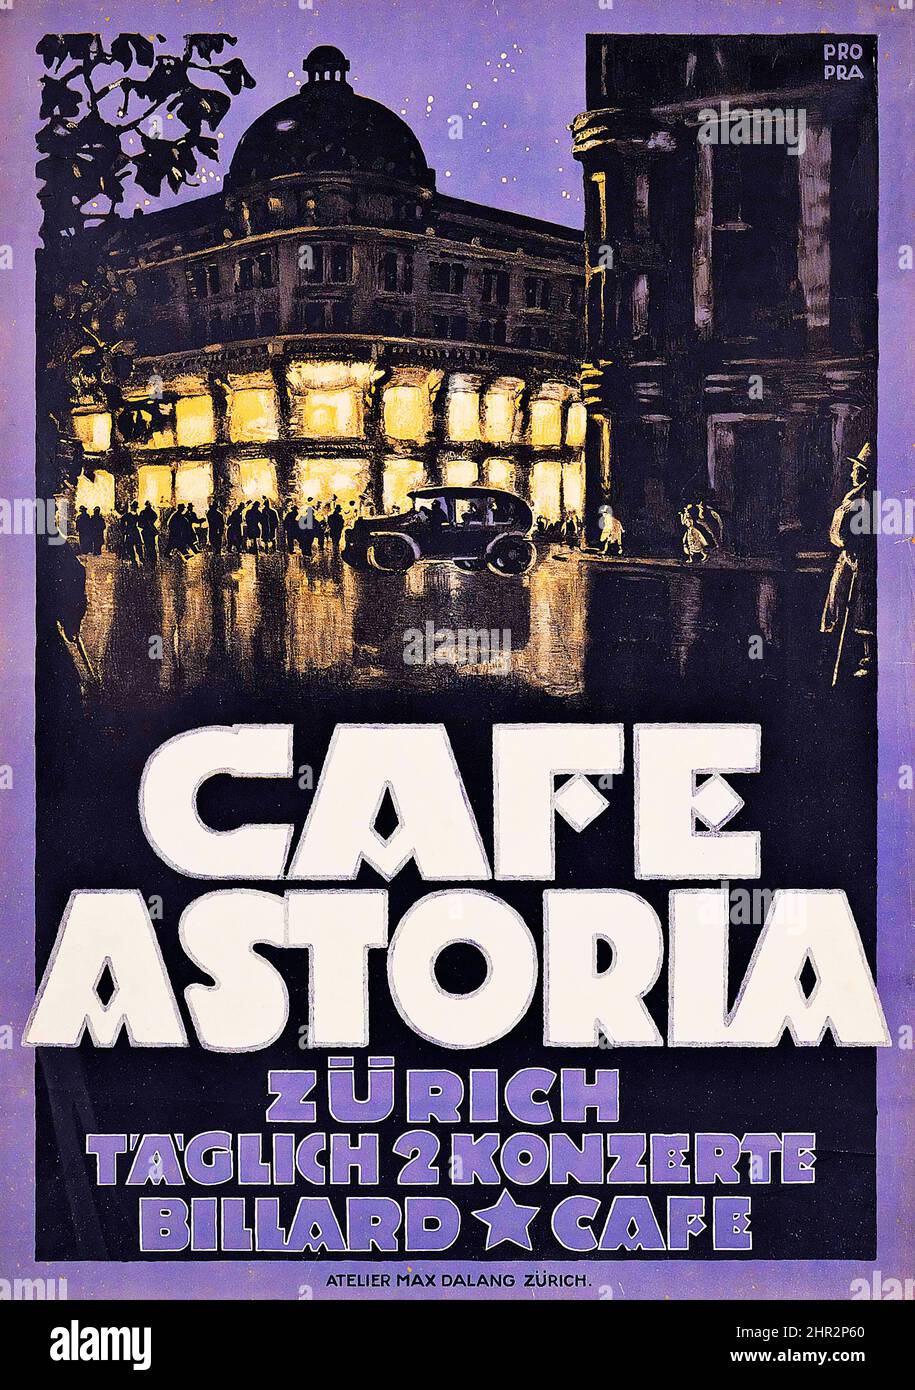 ProPra - CAFE ASTORIA, Zürich, Täglich 2 konzerte, Billard, Cafe - cartel de publicidad vintage, c 1930. Foto de stock